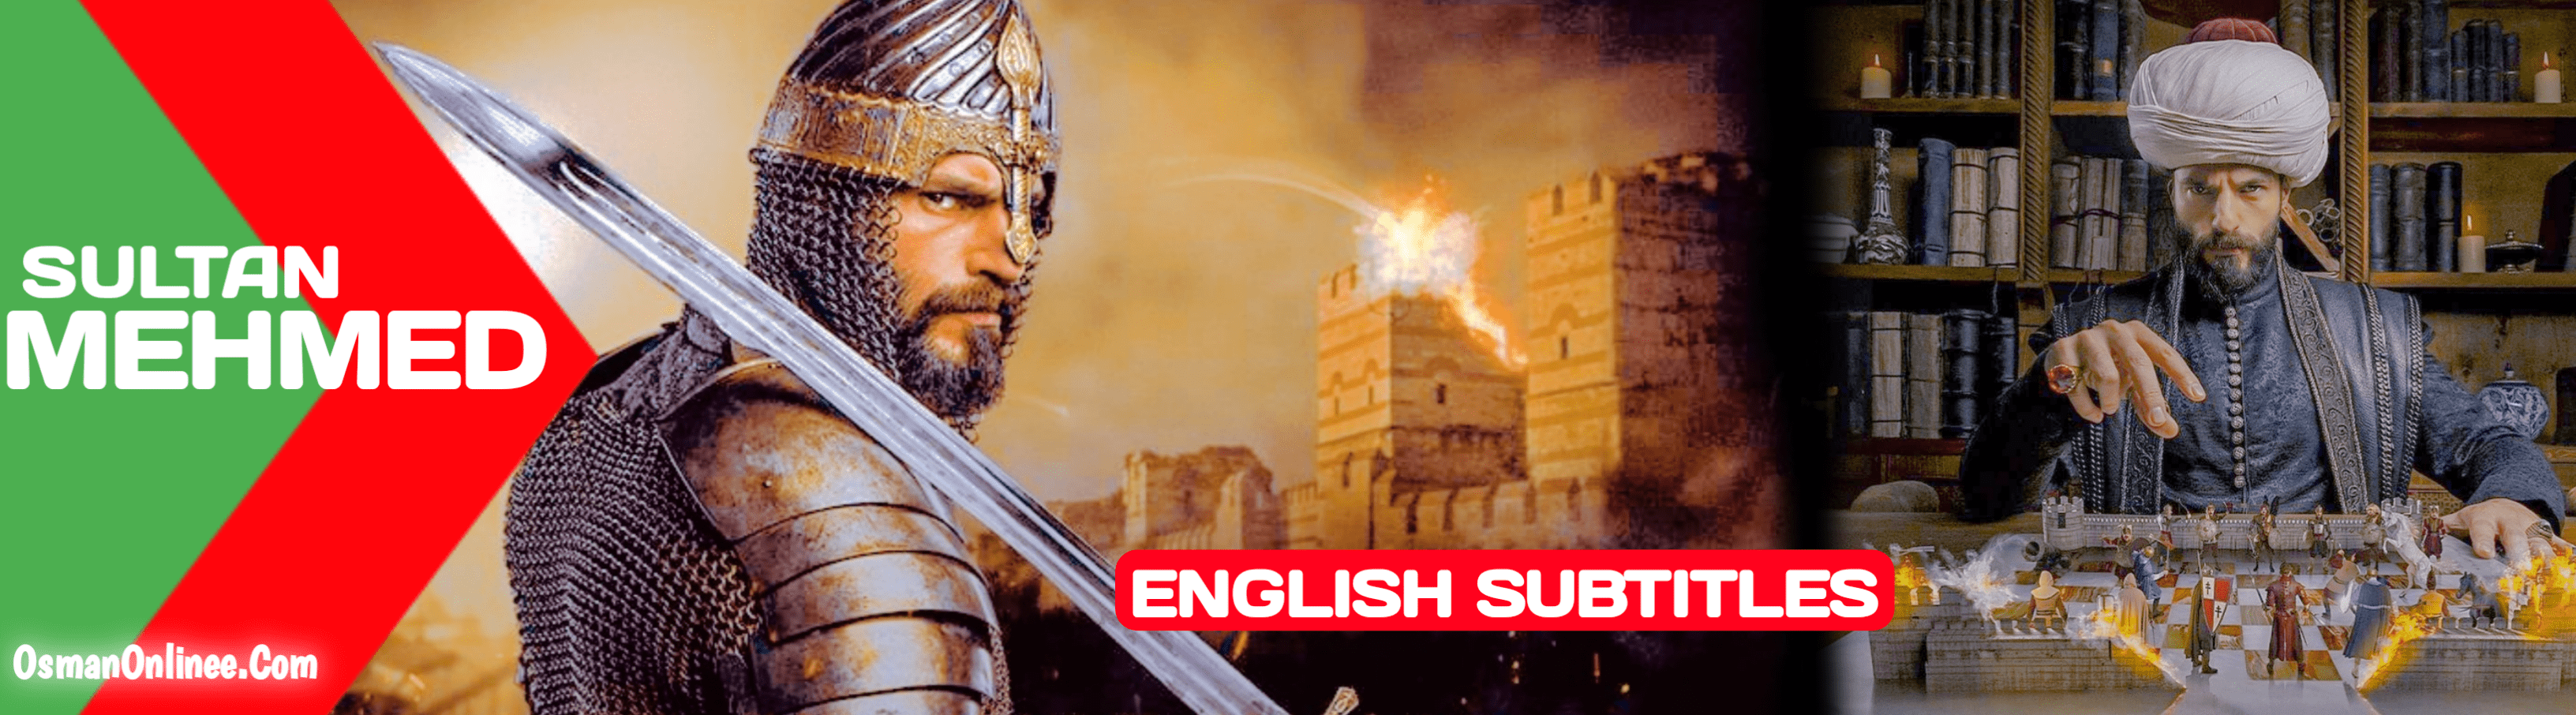 Mehmed Fetihler Sultani With English Subtitles